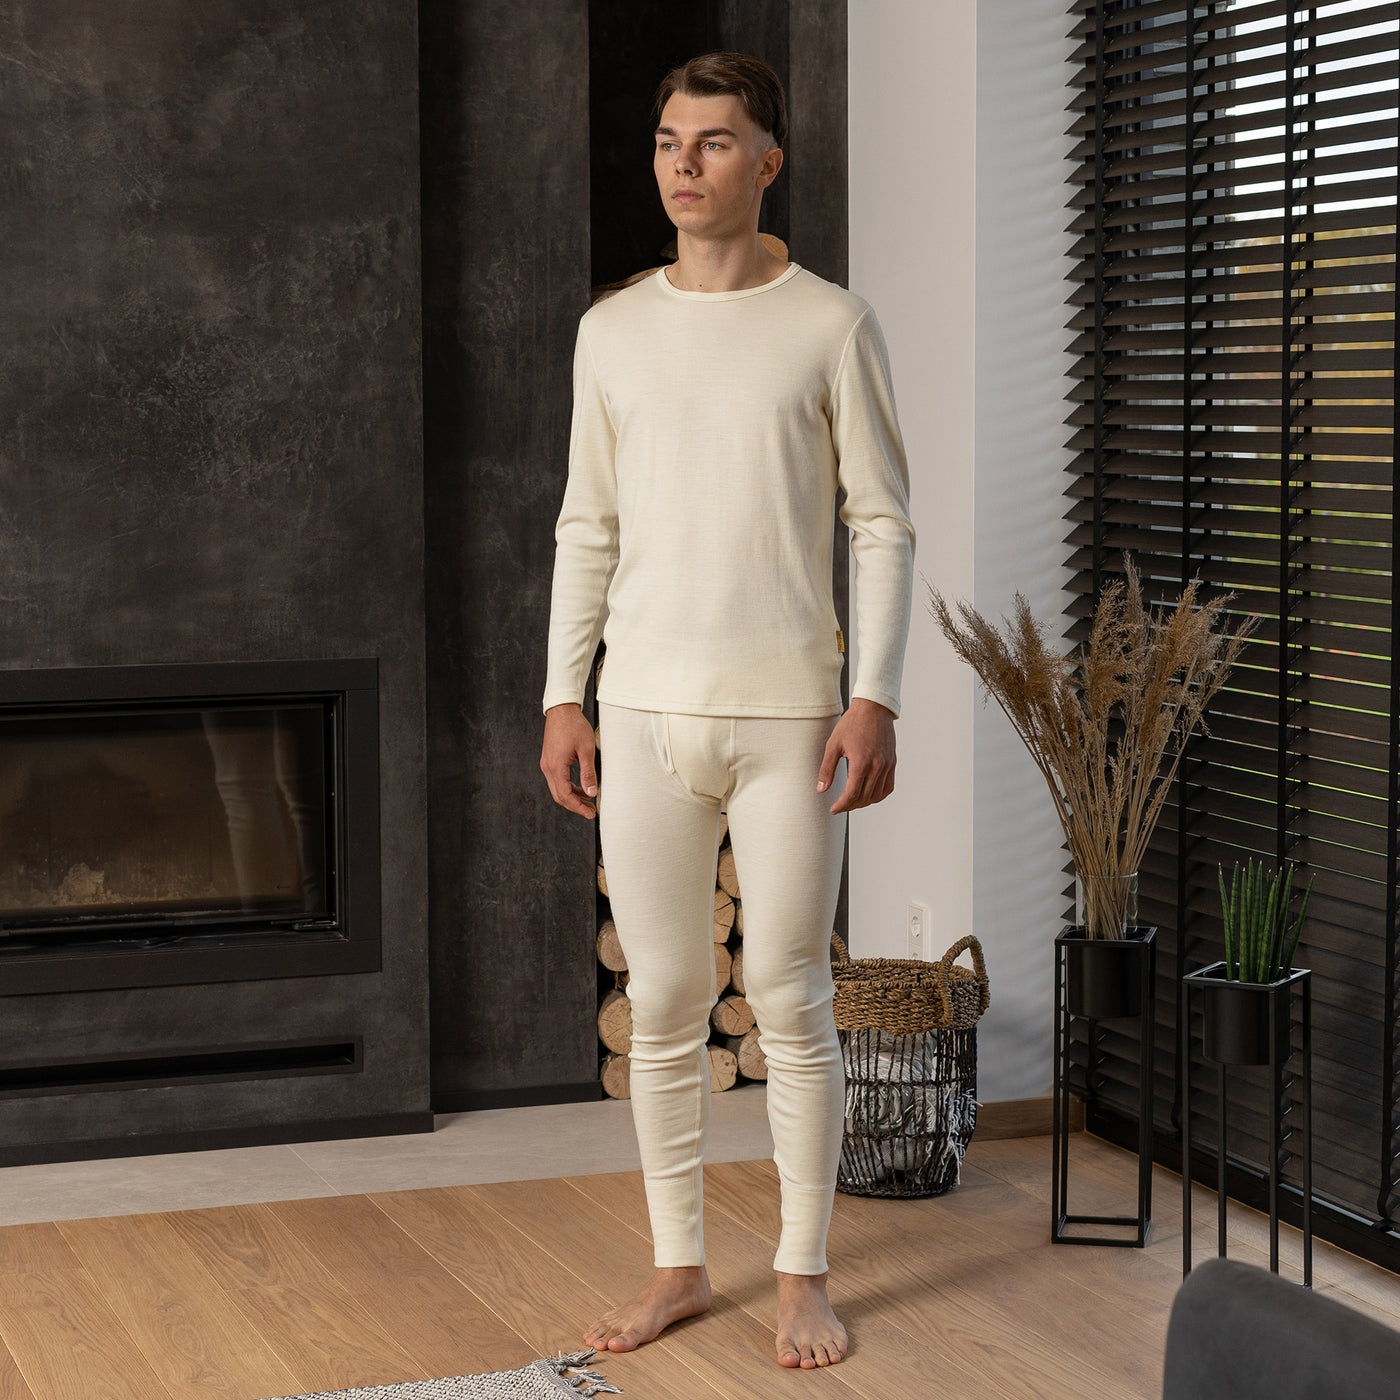 Men Thermal Leggings Outdoor Body Warming Leggings Male Warmer Underwear  Elastic Simple Color Man Warm Pants Clothing Accessory Gray 